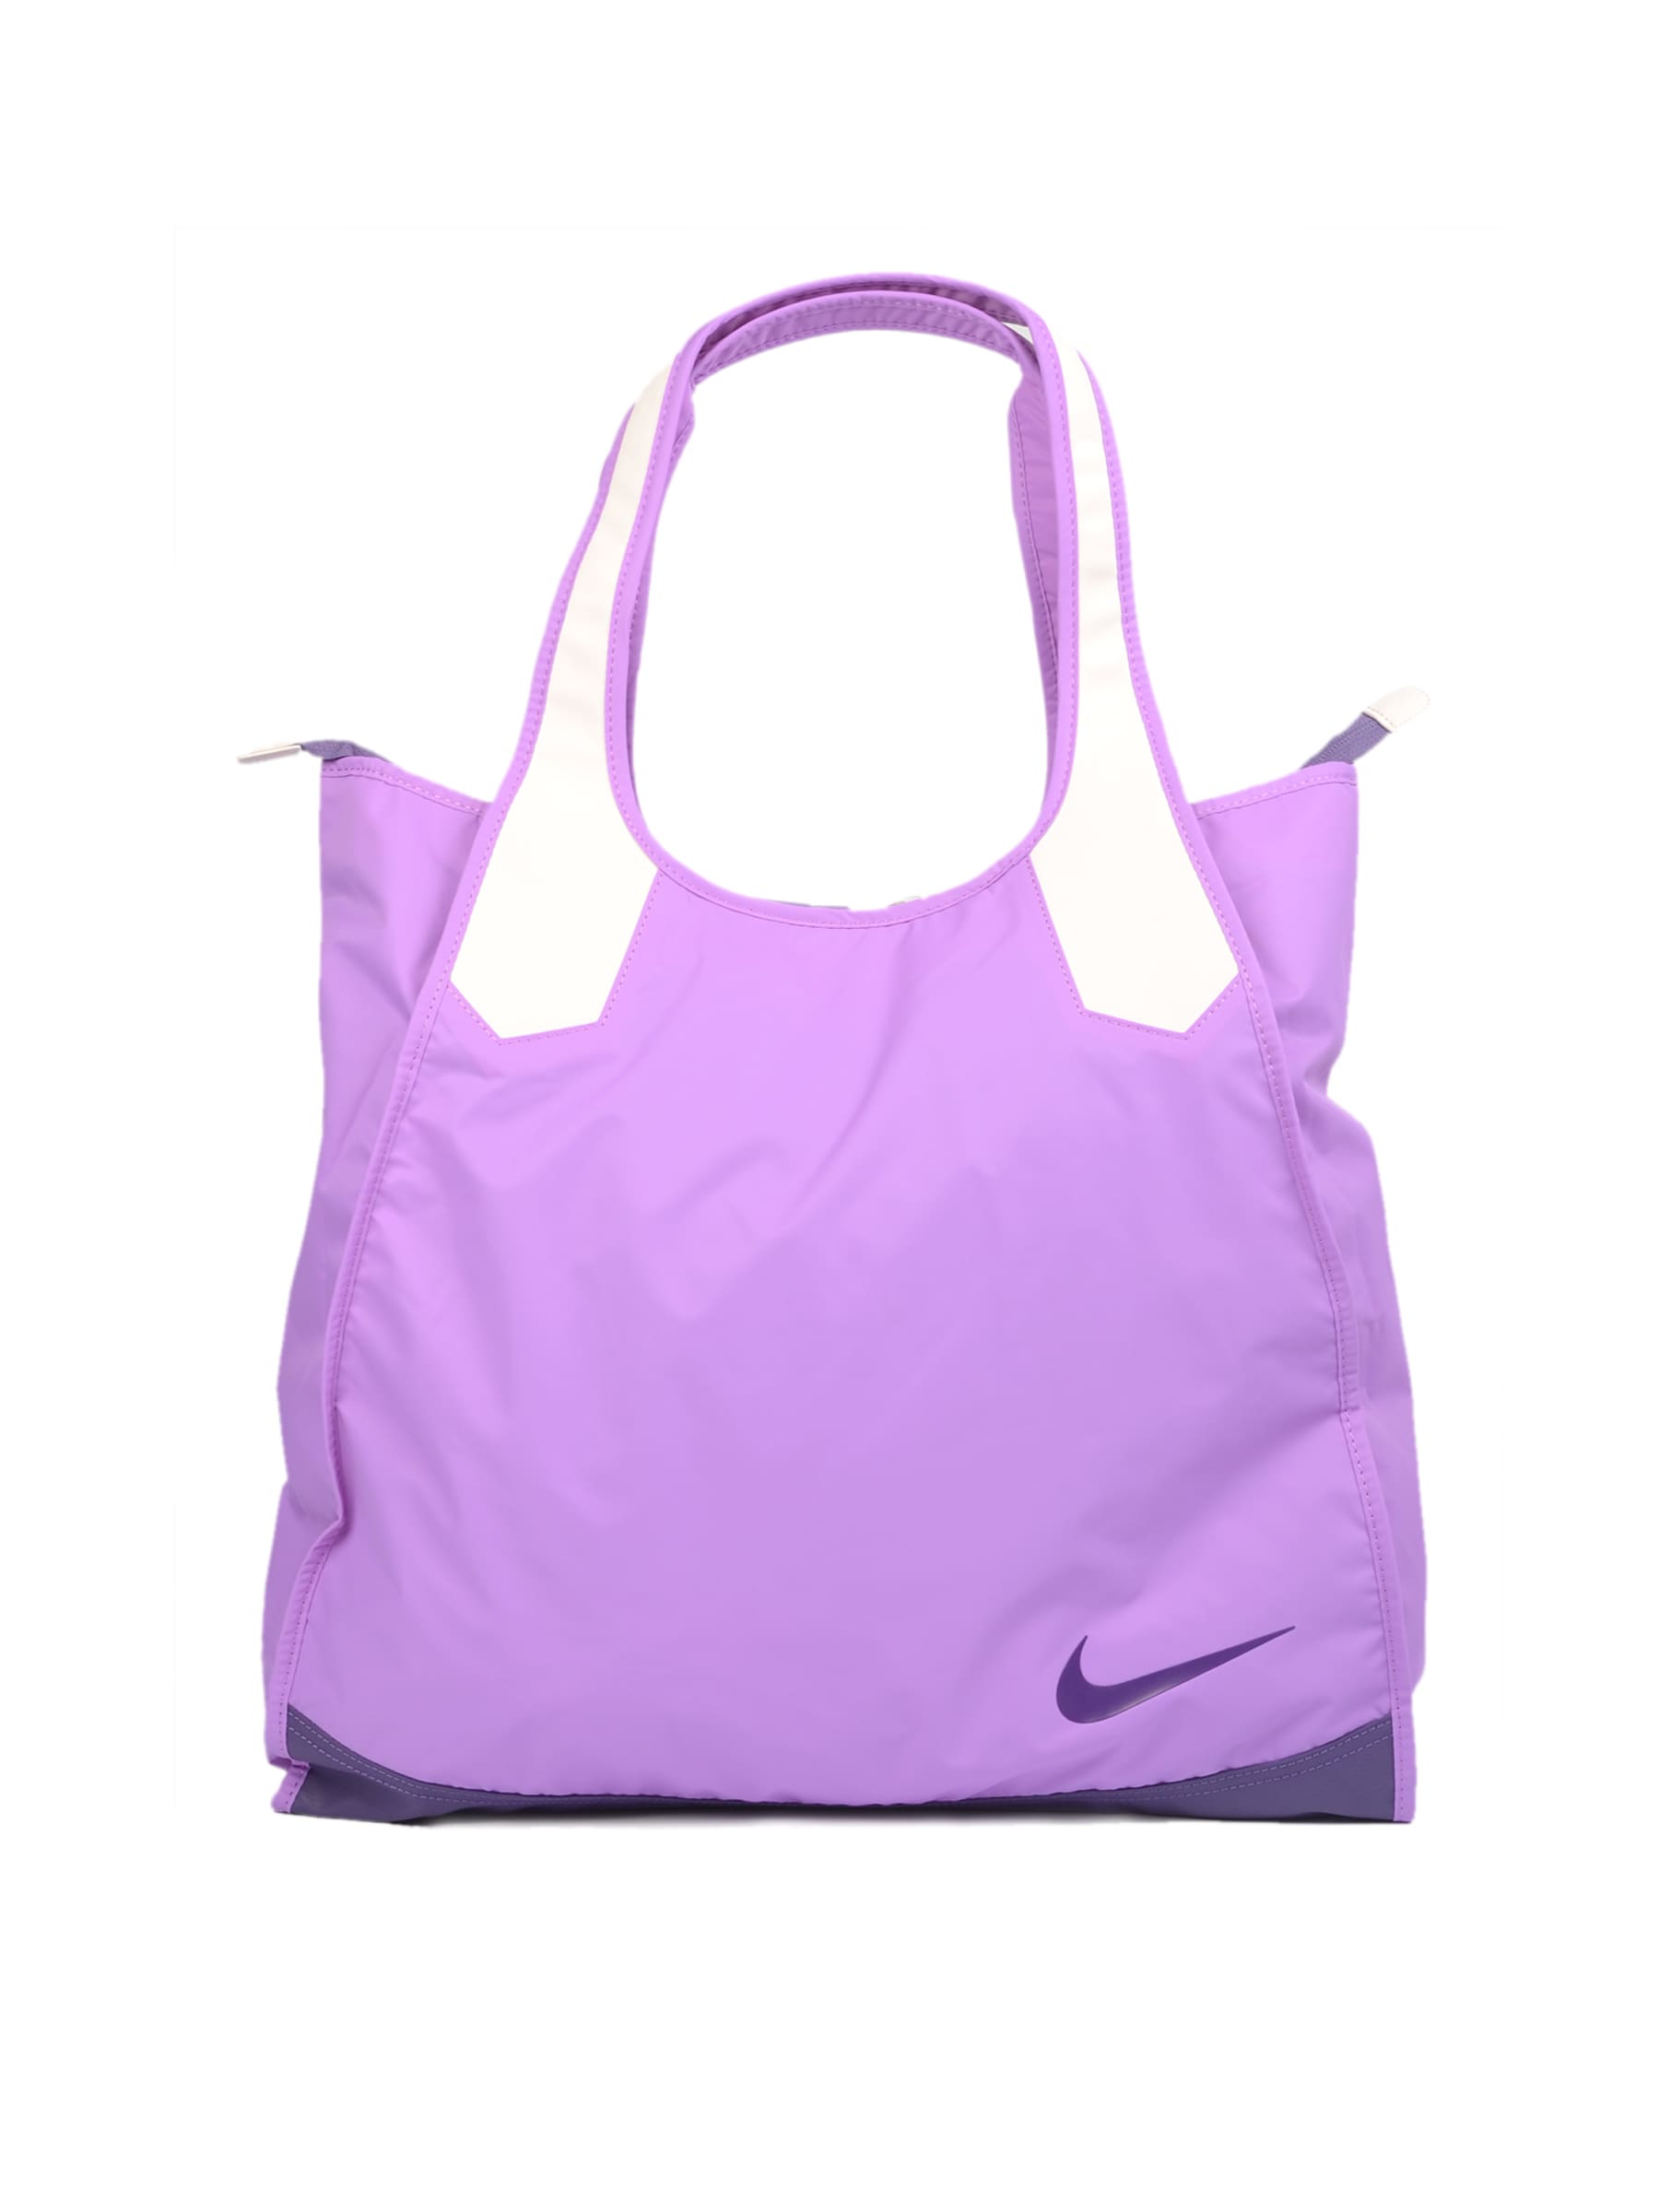 Nike Women Nike Purple Tote Purple Bags